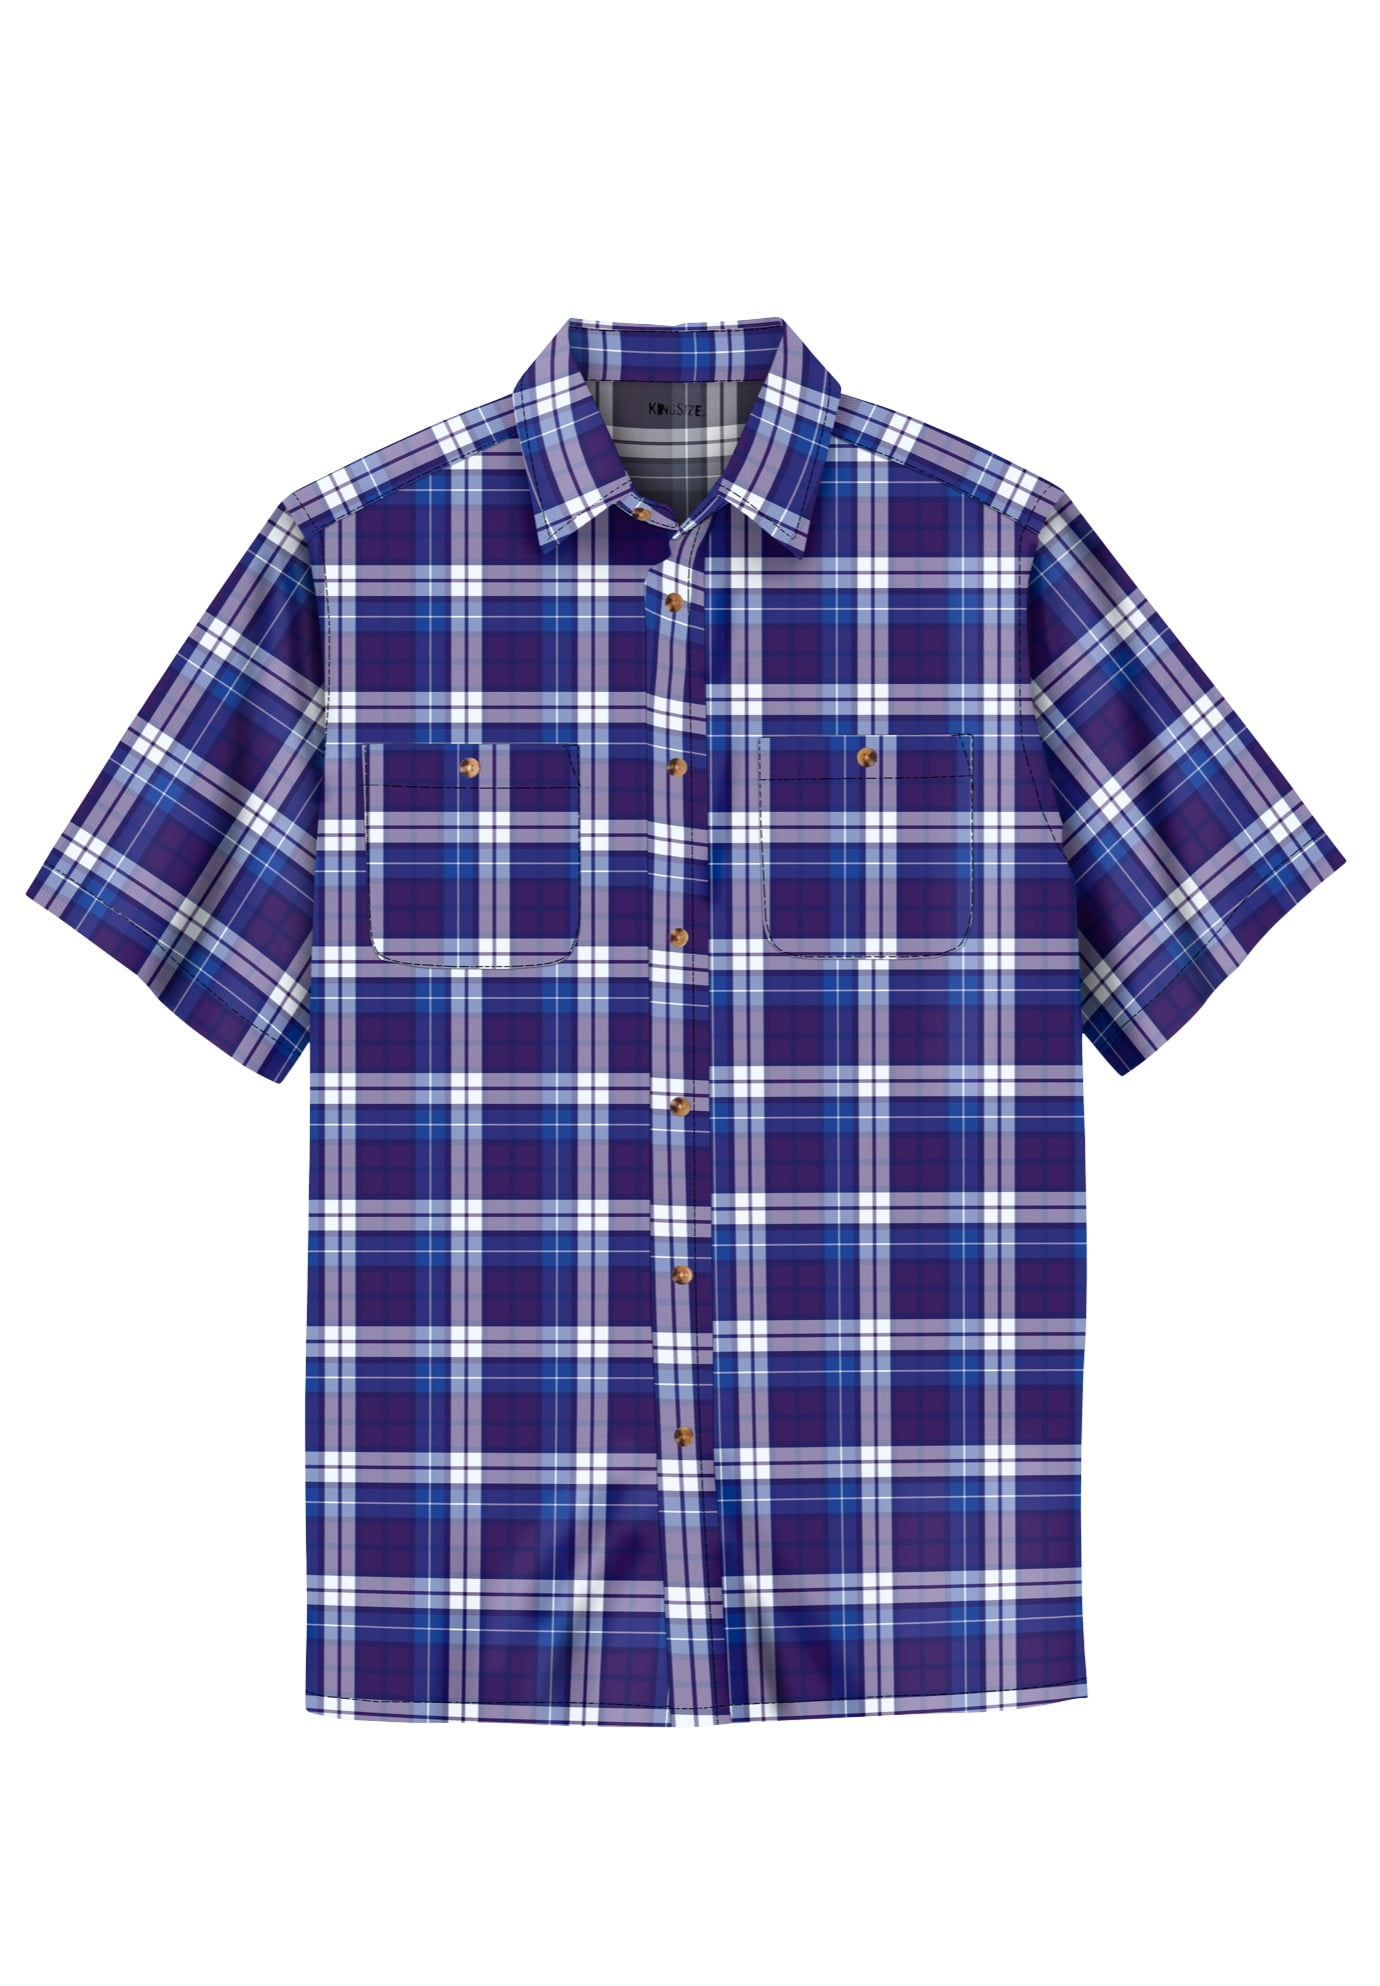 Kingsize Men's Big & Tall Short-Sleeve Plaid Sport Shirt - Walmart.com